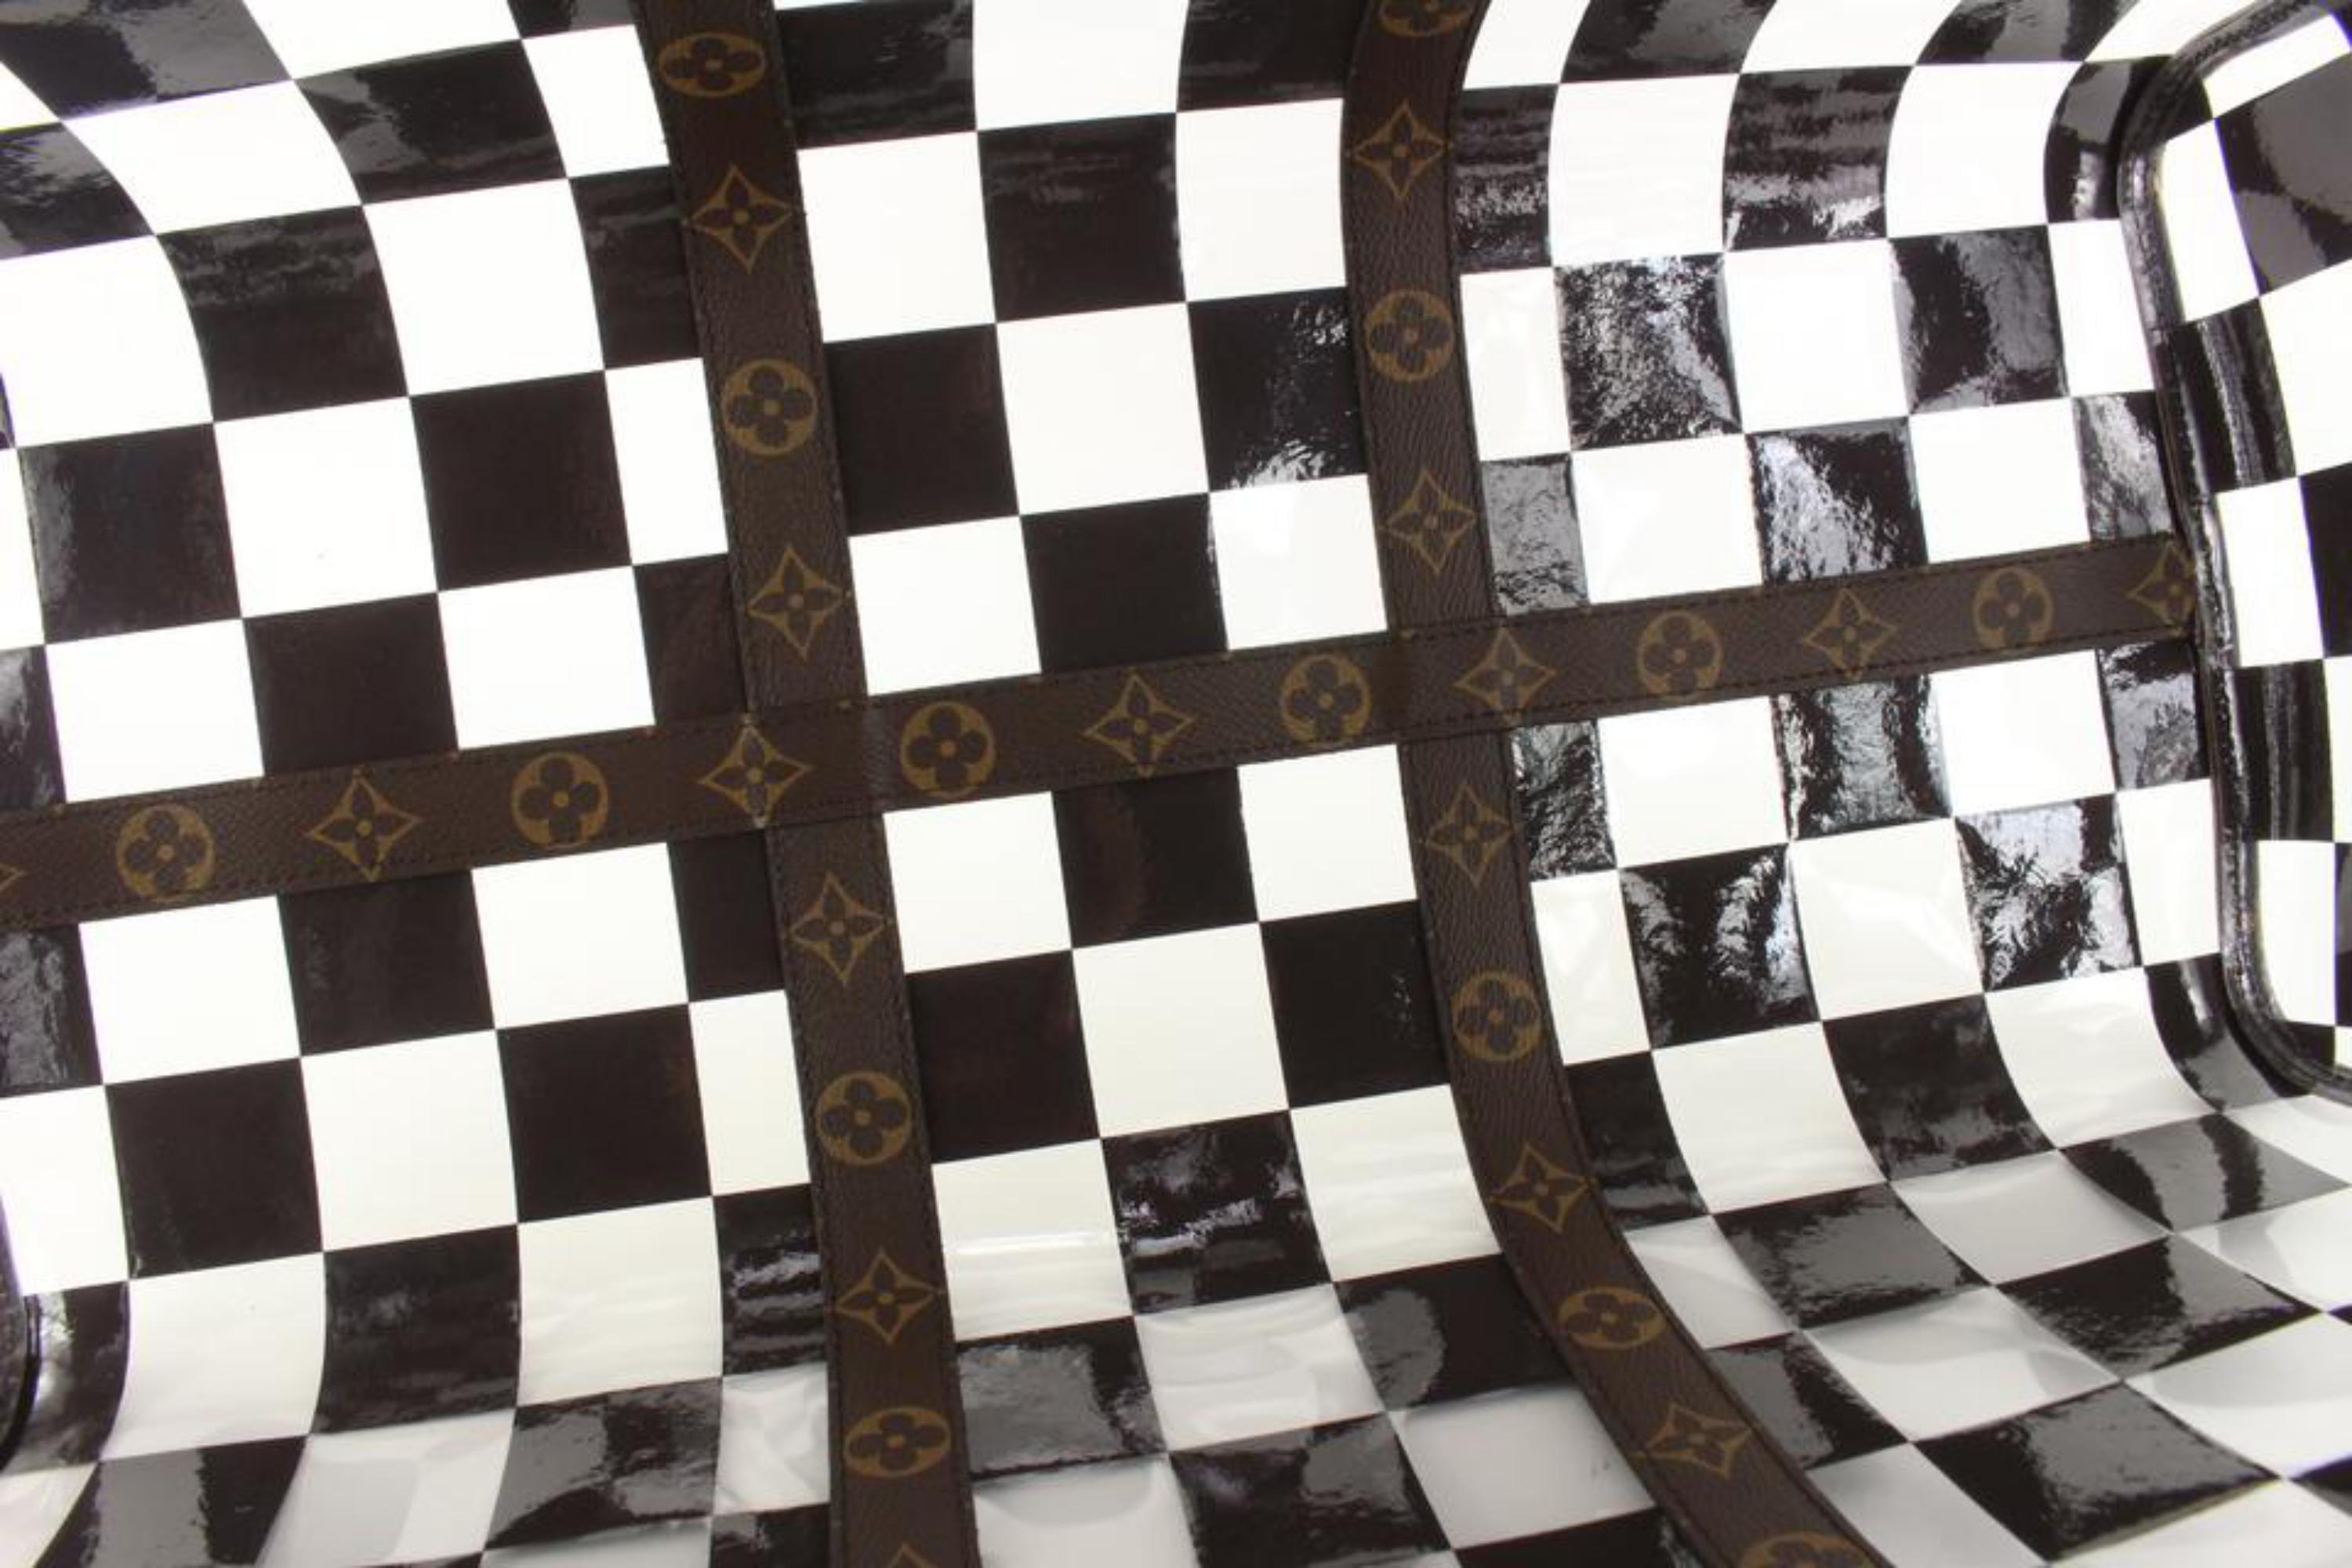 Louis Vuitton Keepall Bandouliere 50 Monogram Chess Brown/Clear